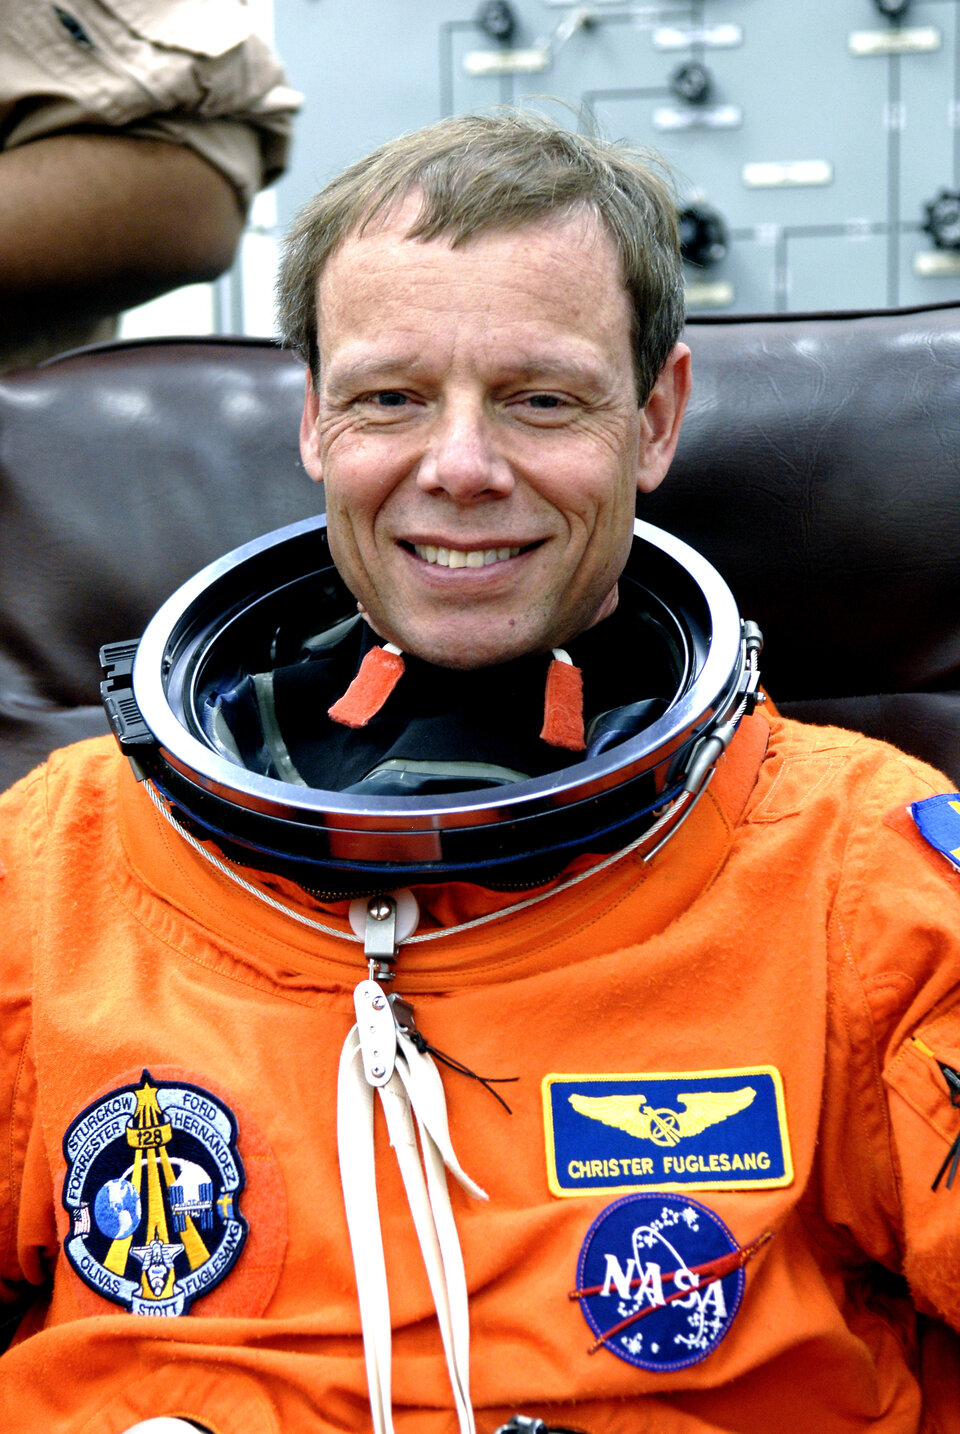 Christer Fuglesang's second spaceflight